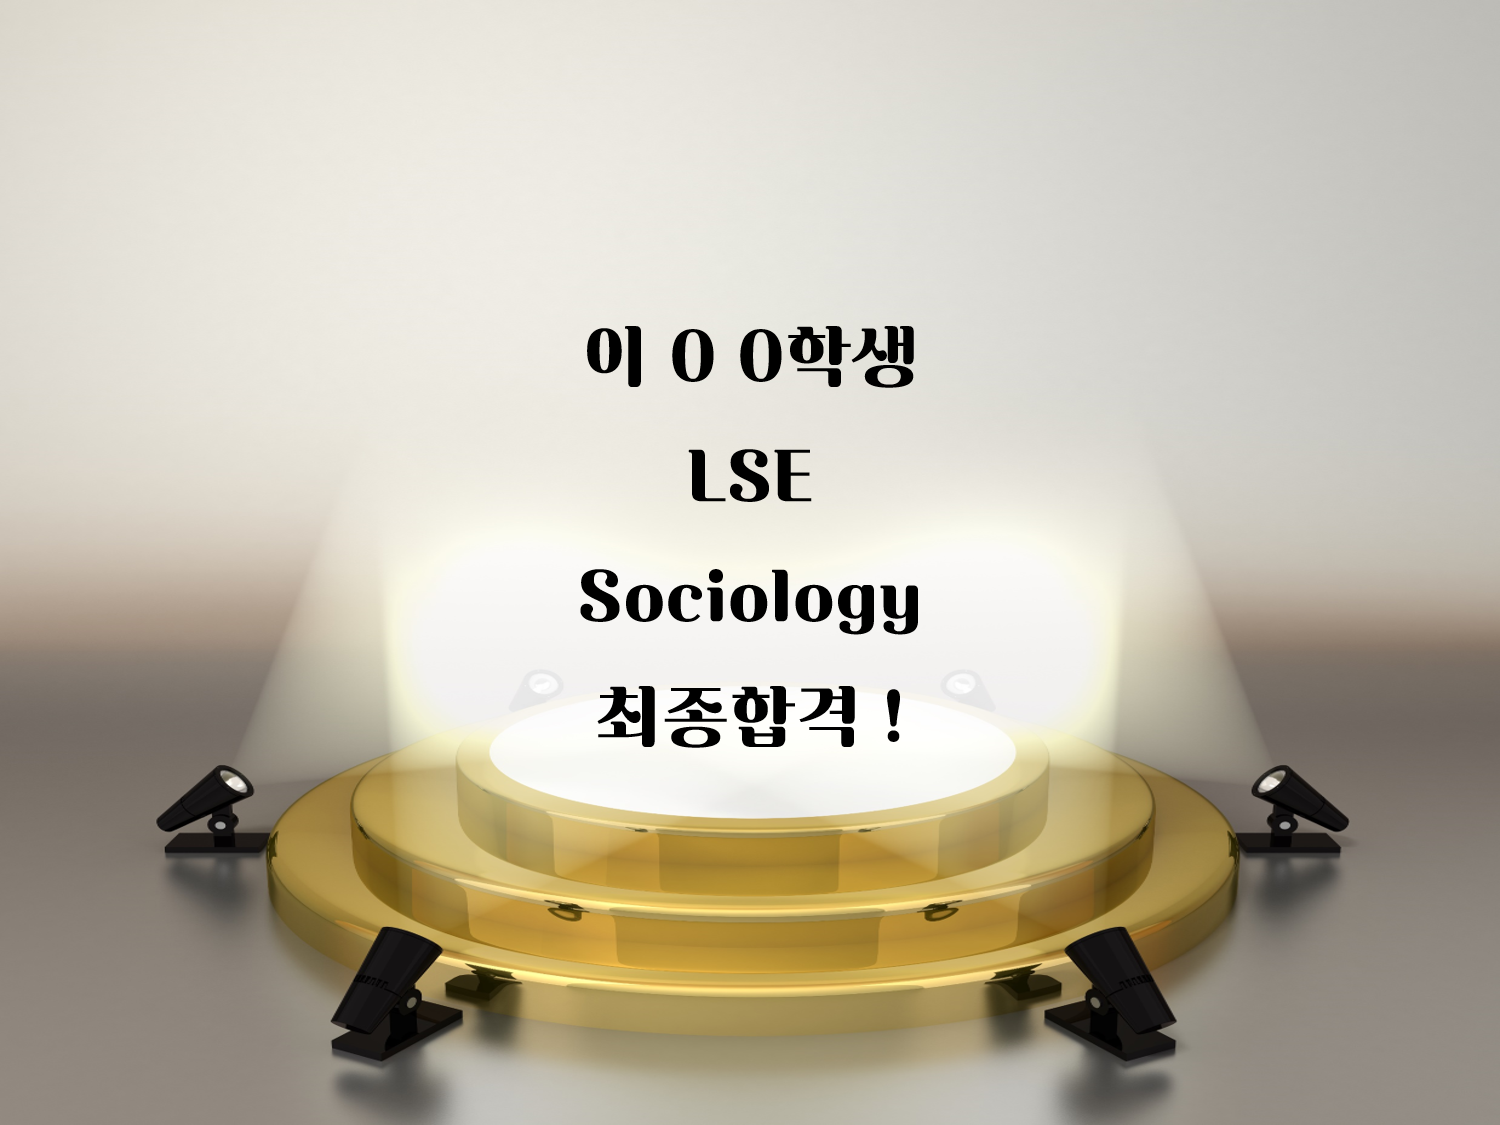 LSE: Sociology